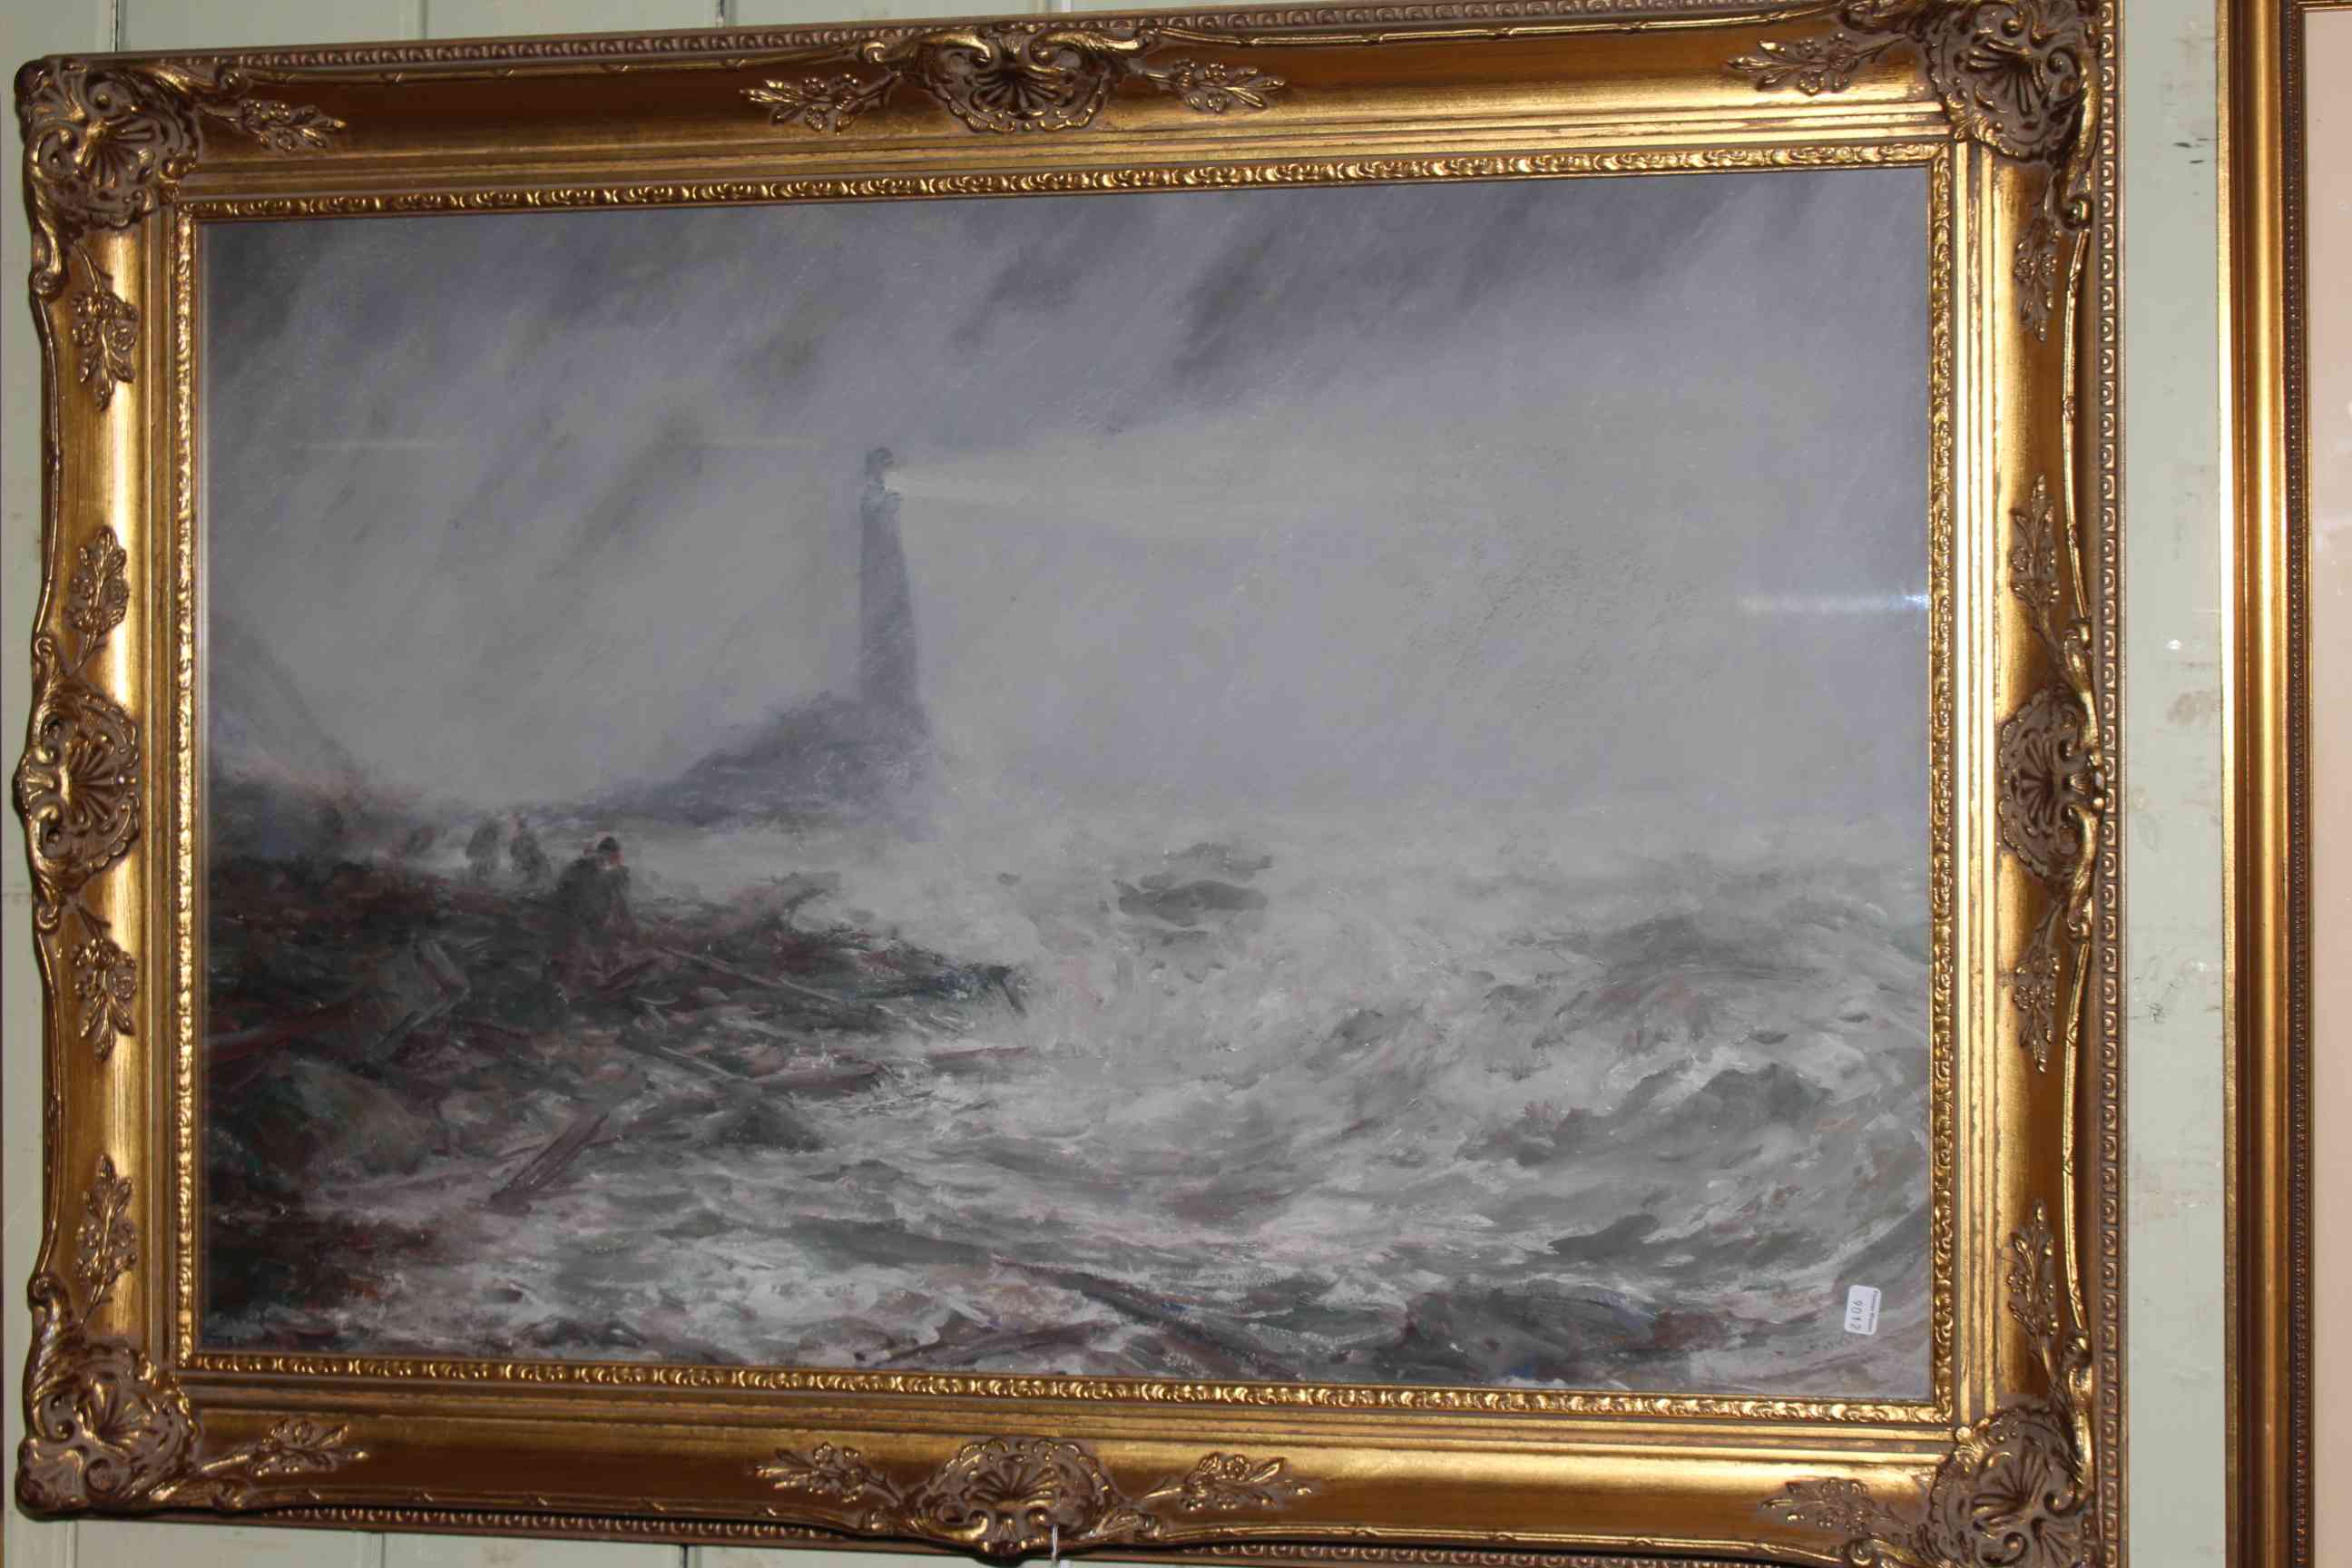 J.F. Slater (1857-1937), Treachery of fog at Sea, mixed media, 49cm by 74cm, framed.